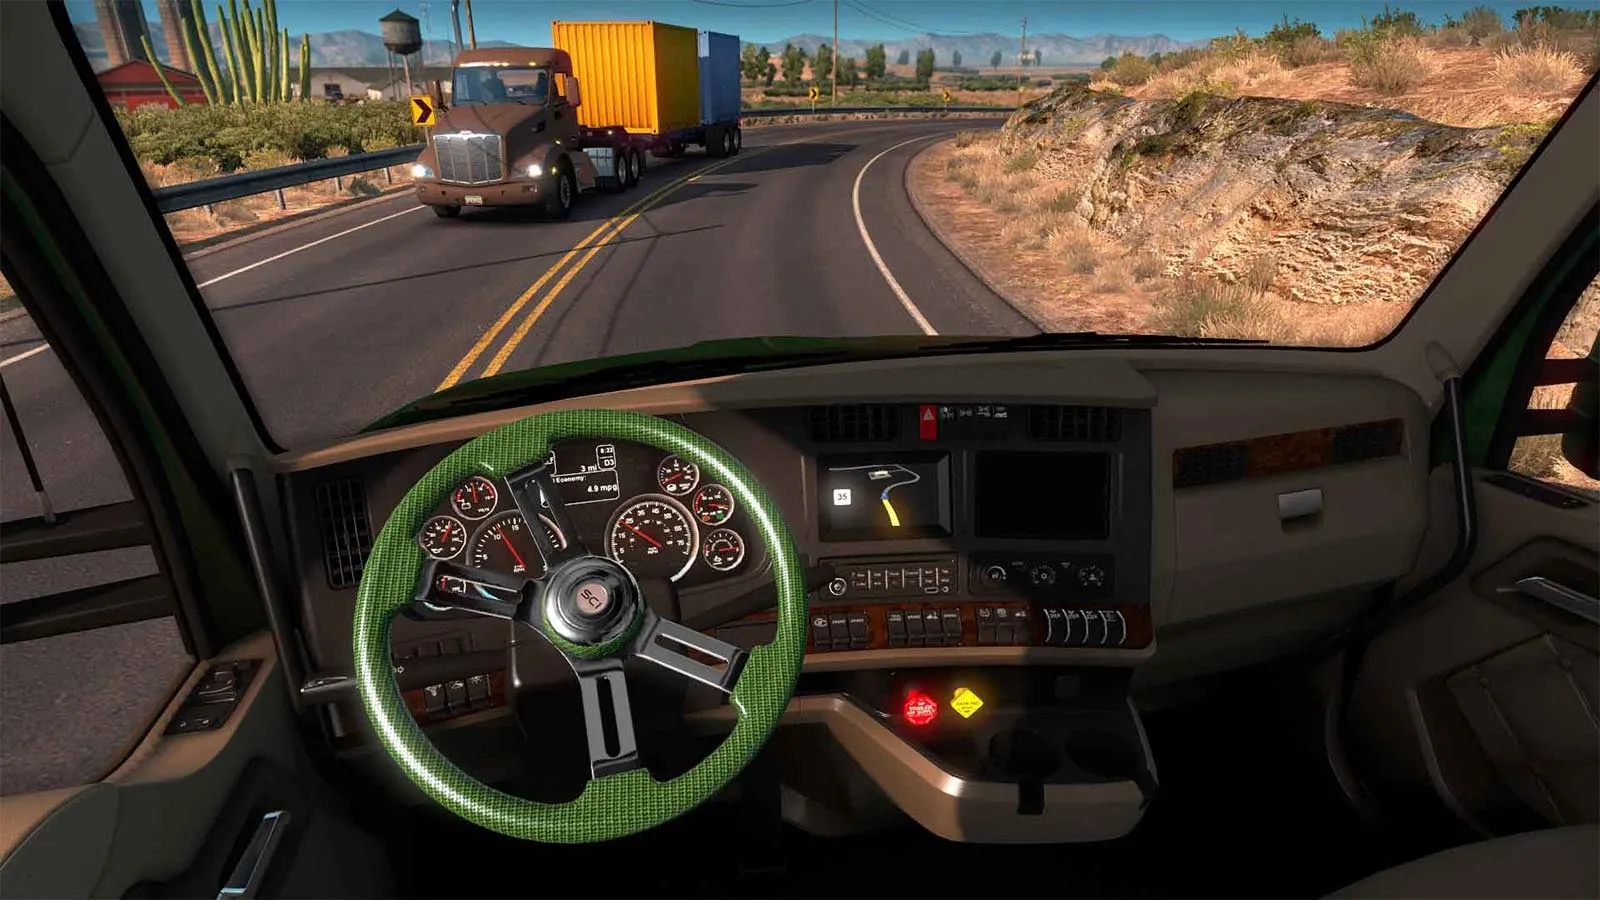 https://stanforddaily.com/wp-content/uploads/2020/02/american-truck-simulator.jpg